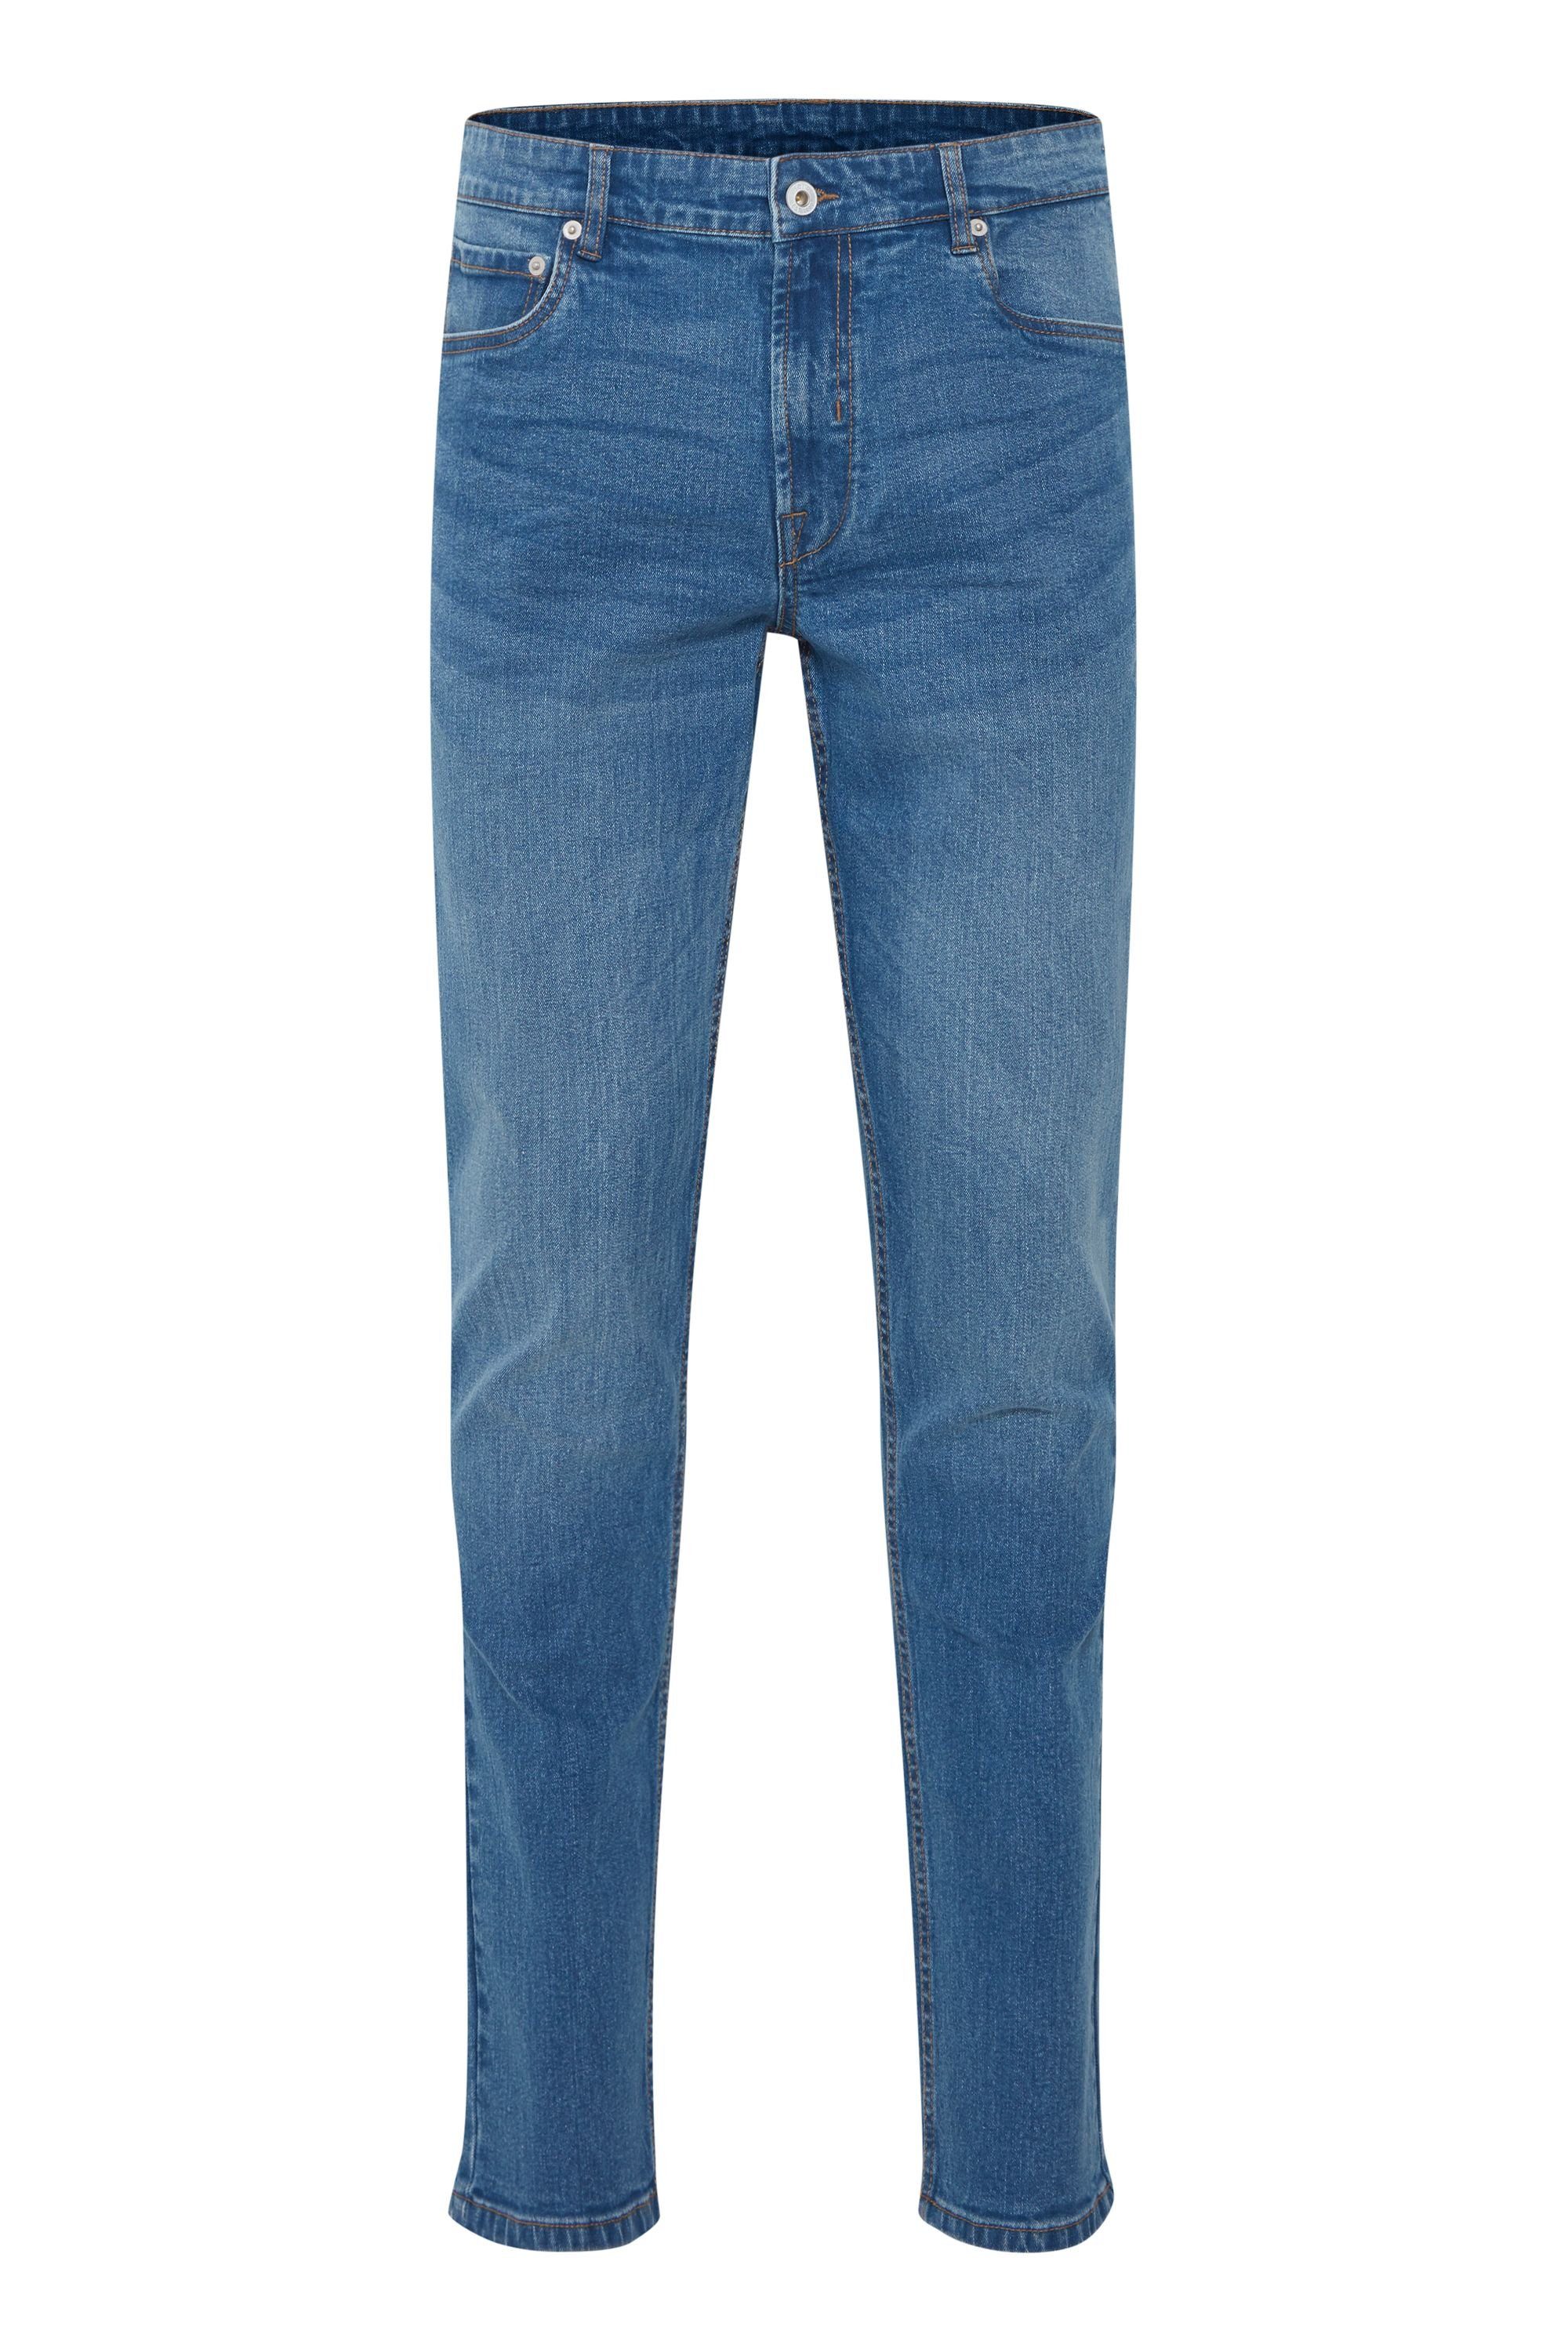 !Solid Blue 5-Pocket-Jeans 200 21104844 - SDJoy